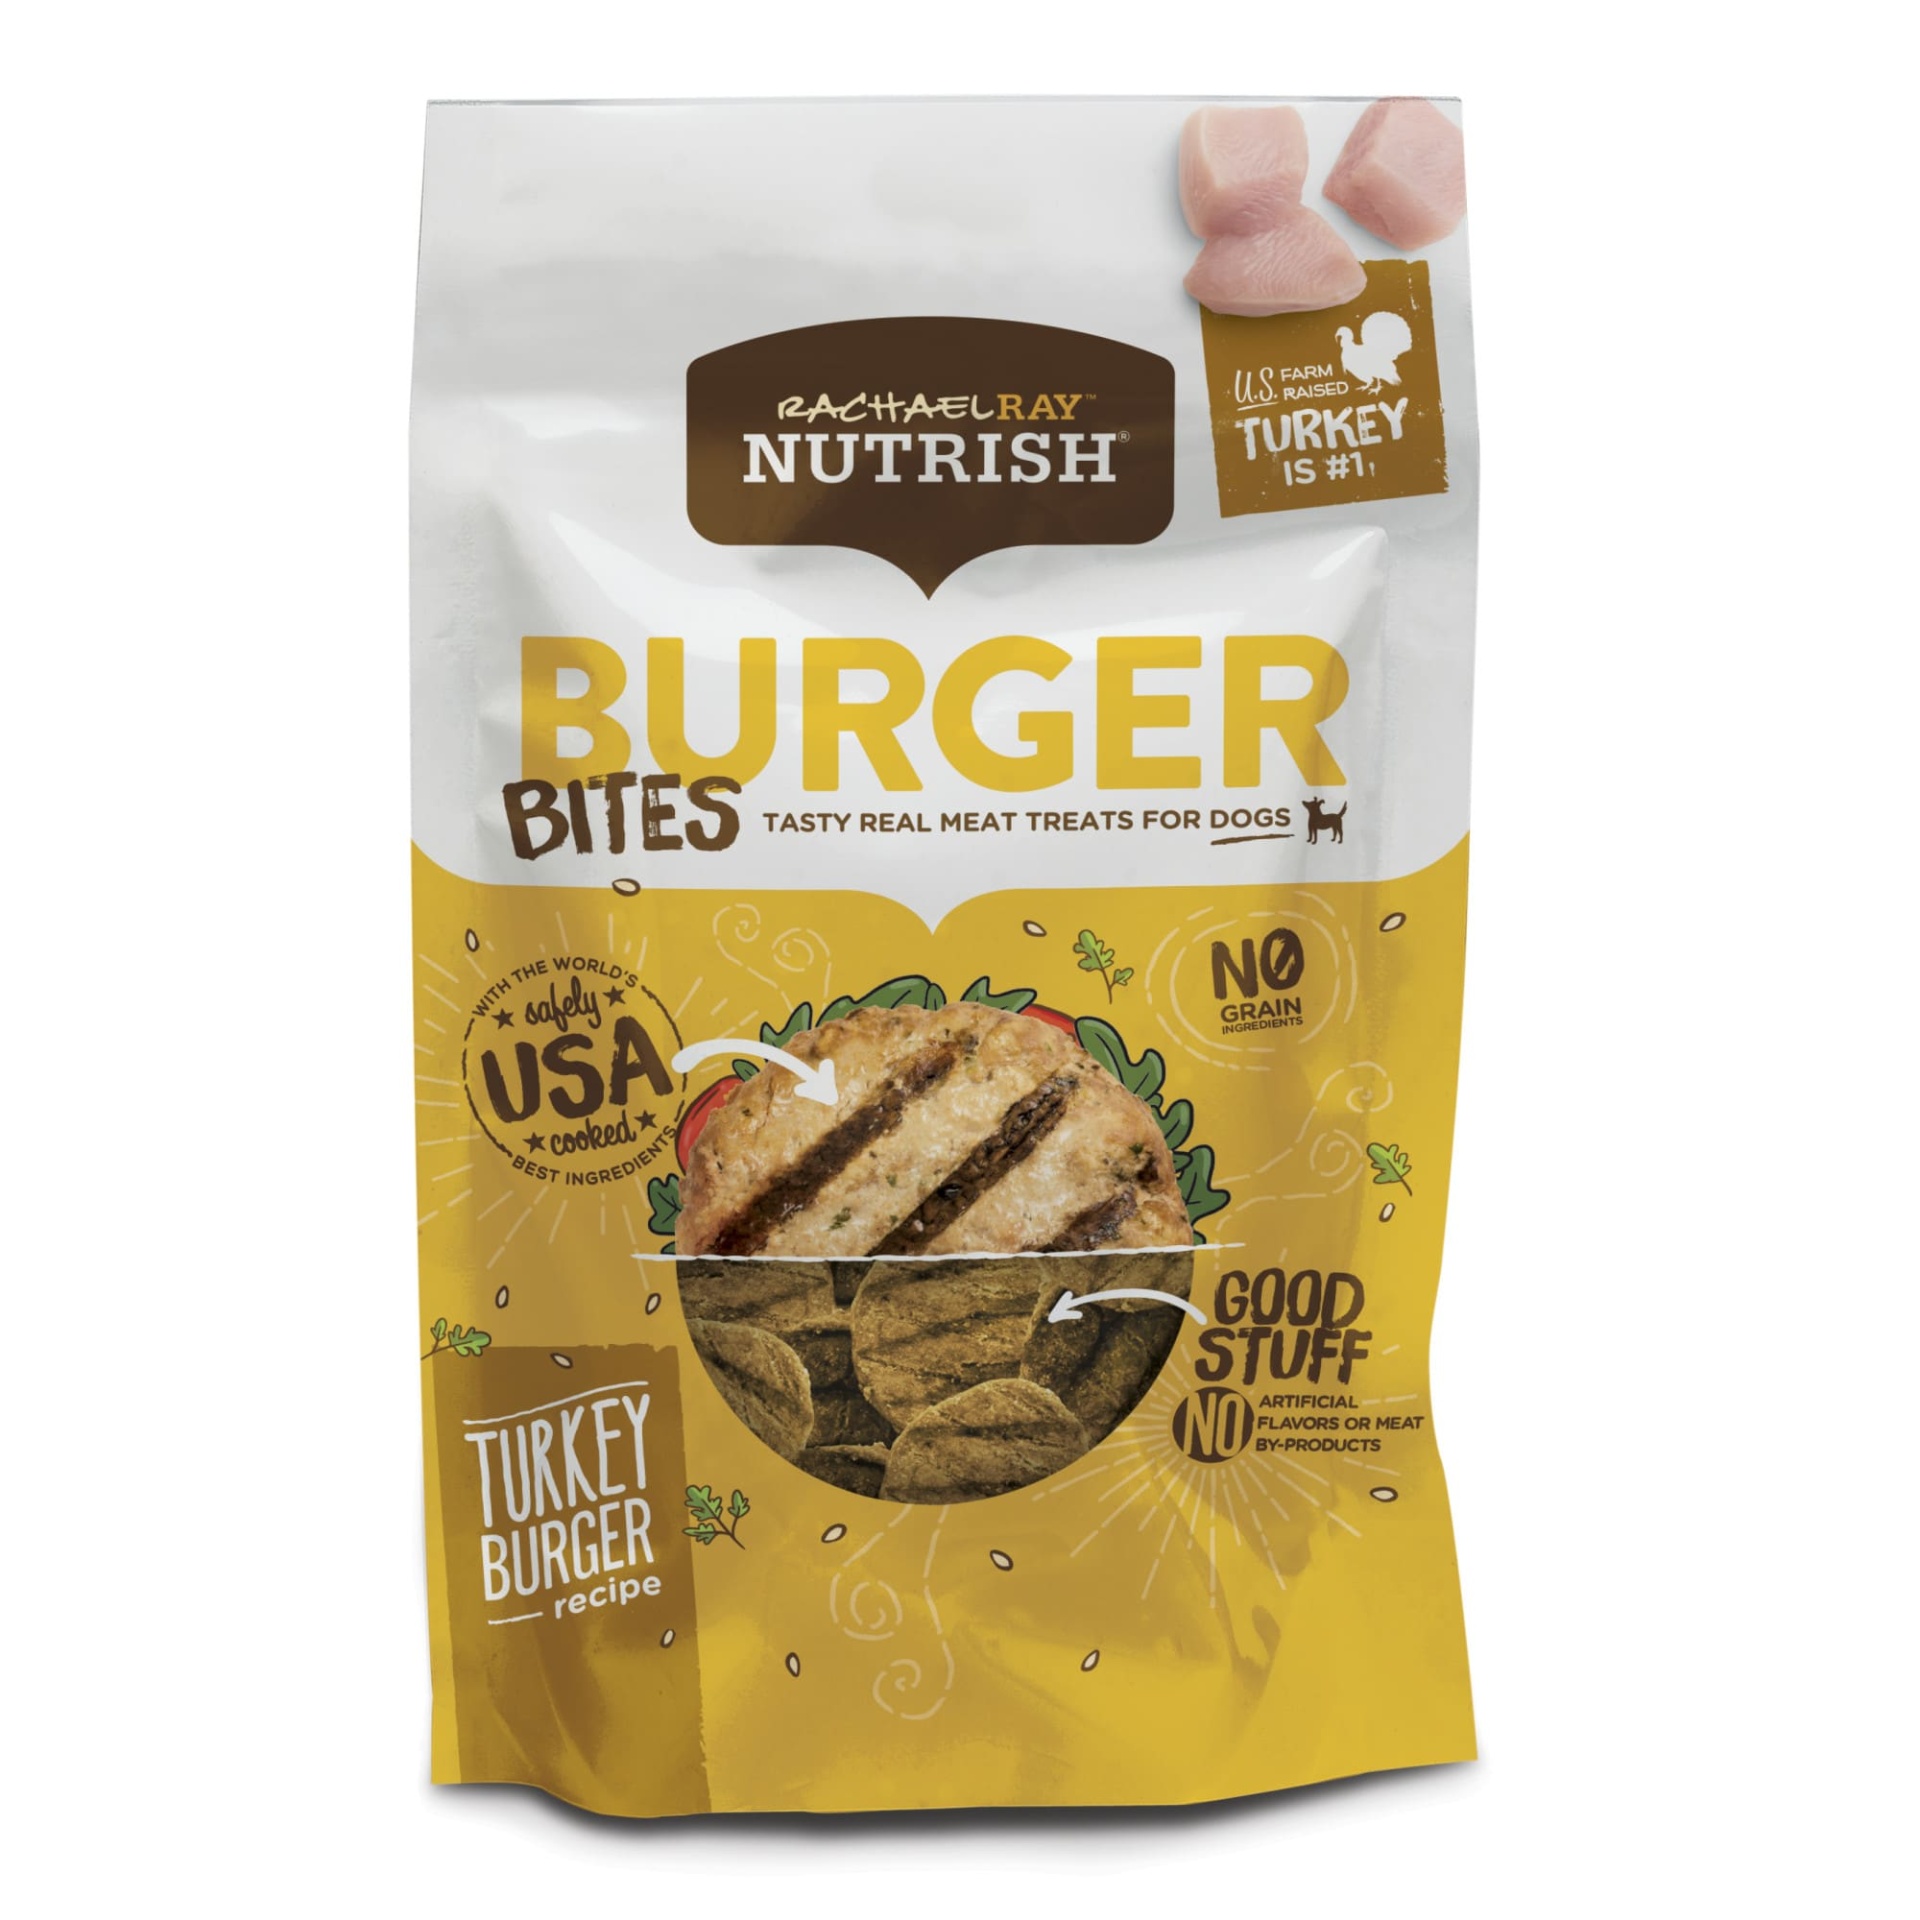 slide 1 of 1, Rachael Ray Nutrish Burger Bites Grain Free Turkey Burger Recipe Dog Treats, 3 oz